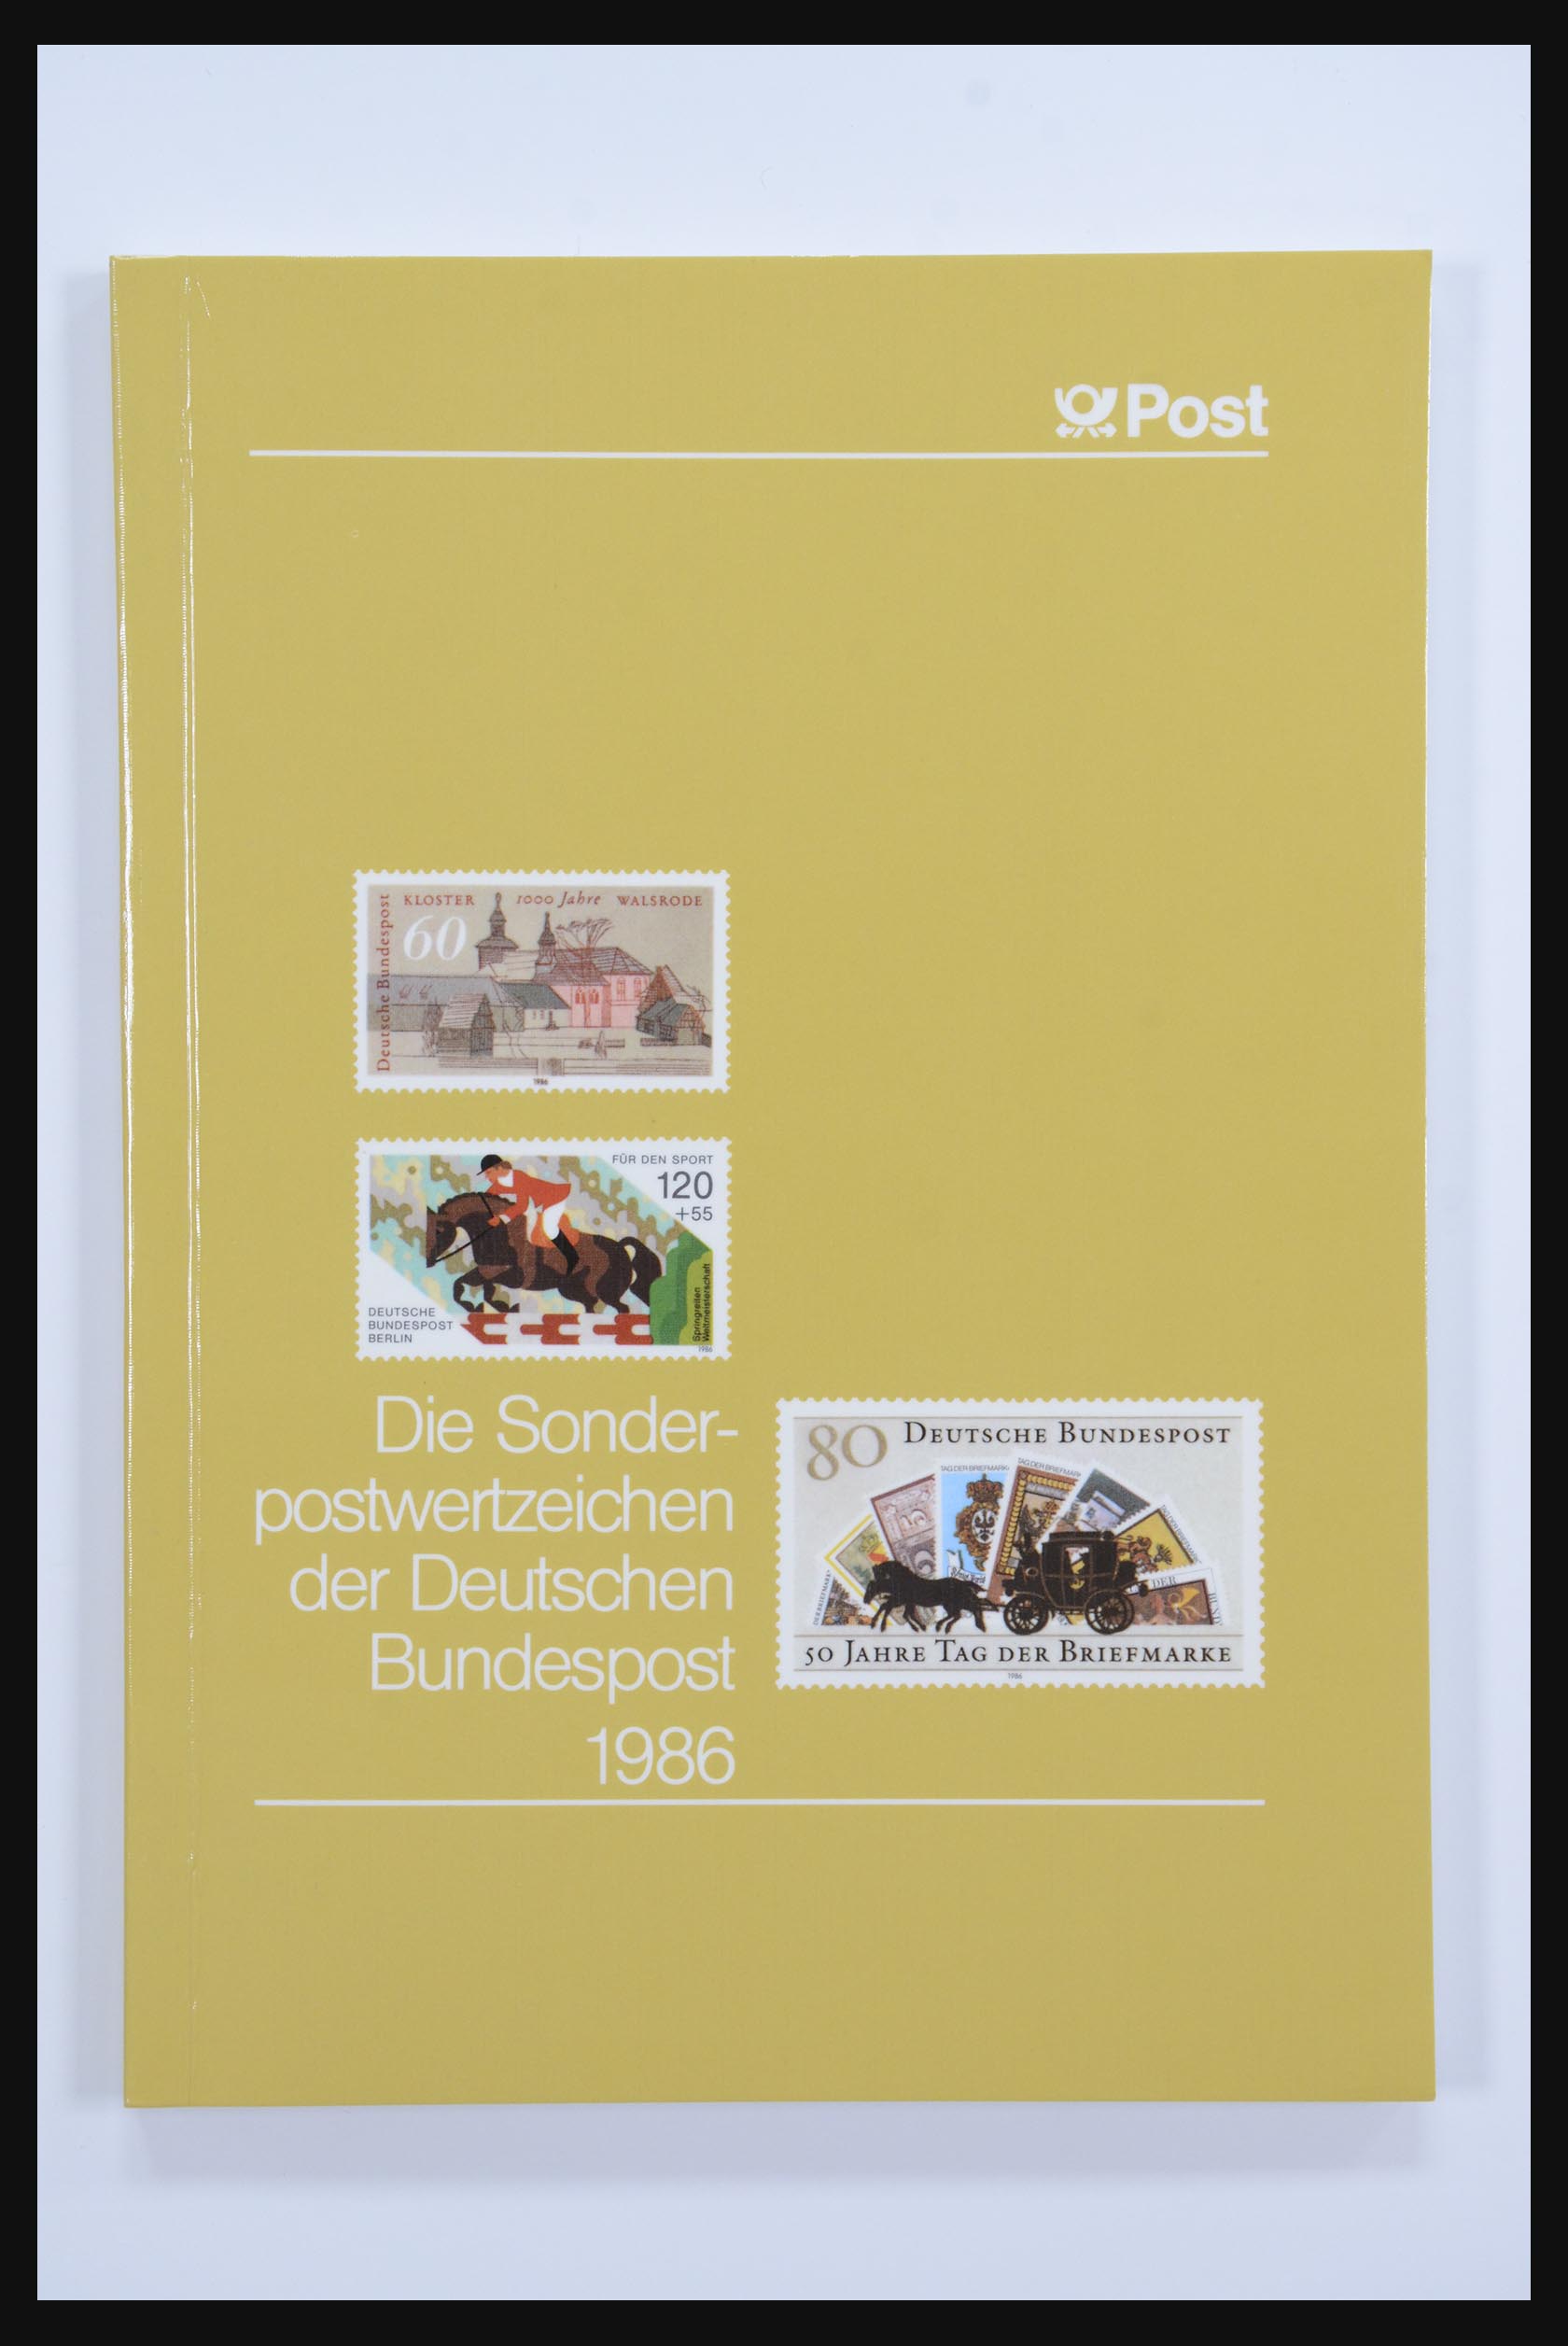 31836 015 - 31836 Bundespost yearbooks 1974-1999.